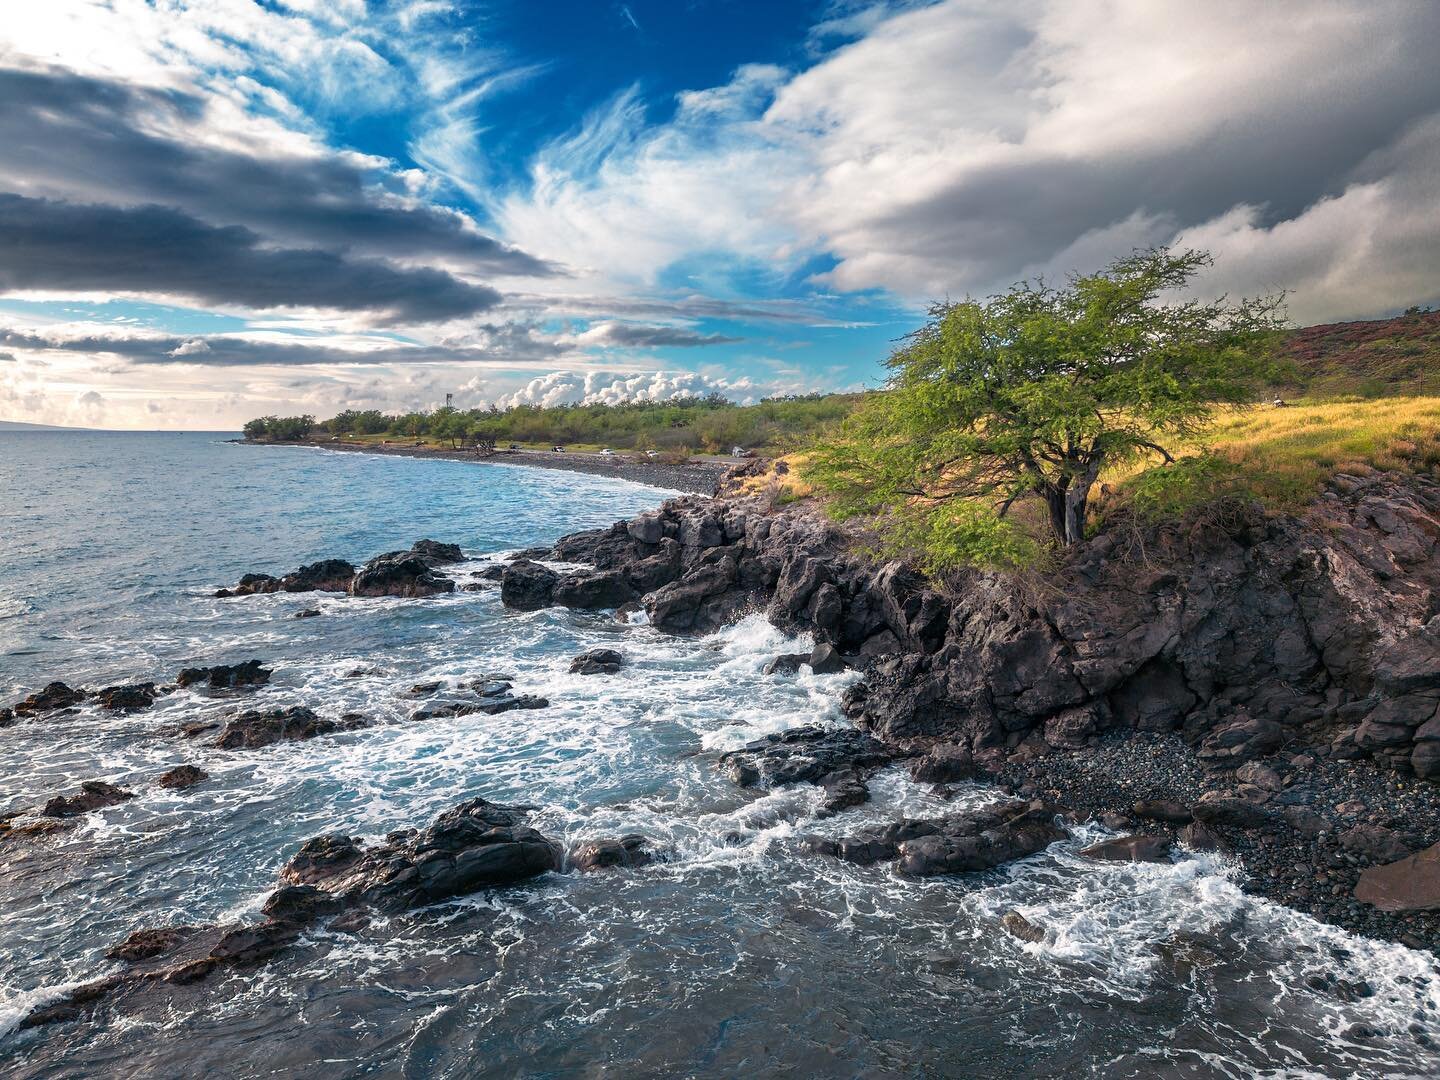 Coastal Tree.

Shoreline on the west coast of Maui along the Honoapiilani Highway near Nalima Wai.

📸 DJI Mini Pro 3

#drone_photography #drone #pictas #raw #raw_beaches #hawaii #maui #raw_potd #oahu #raw_landscape #raw__photography #raw__drone #edg